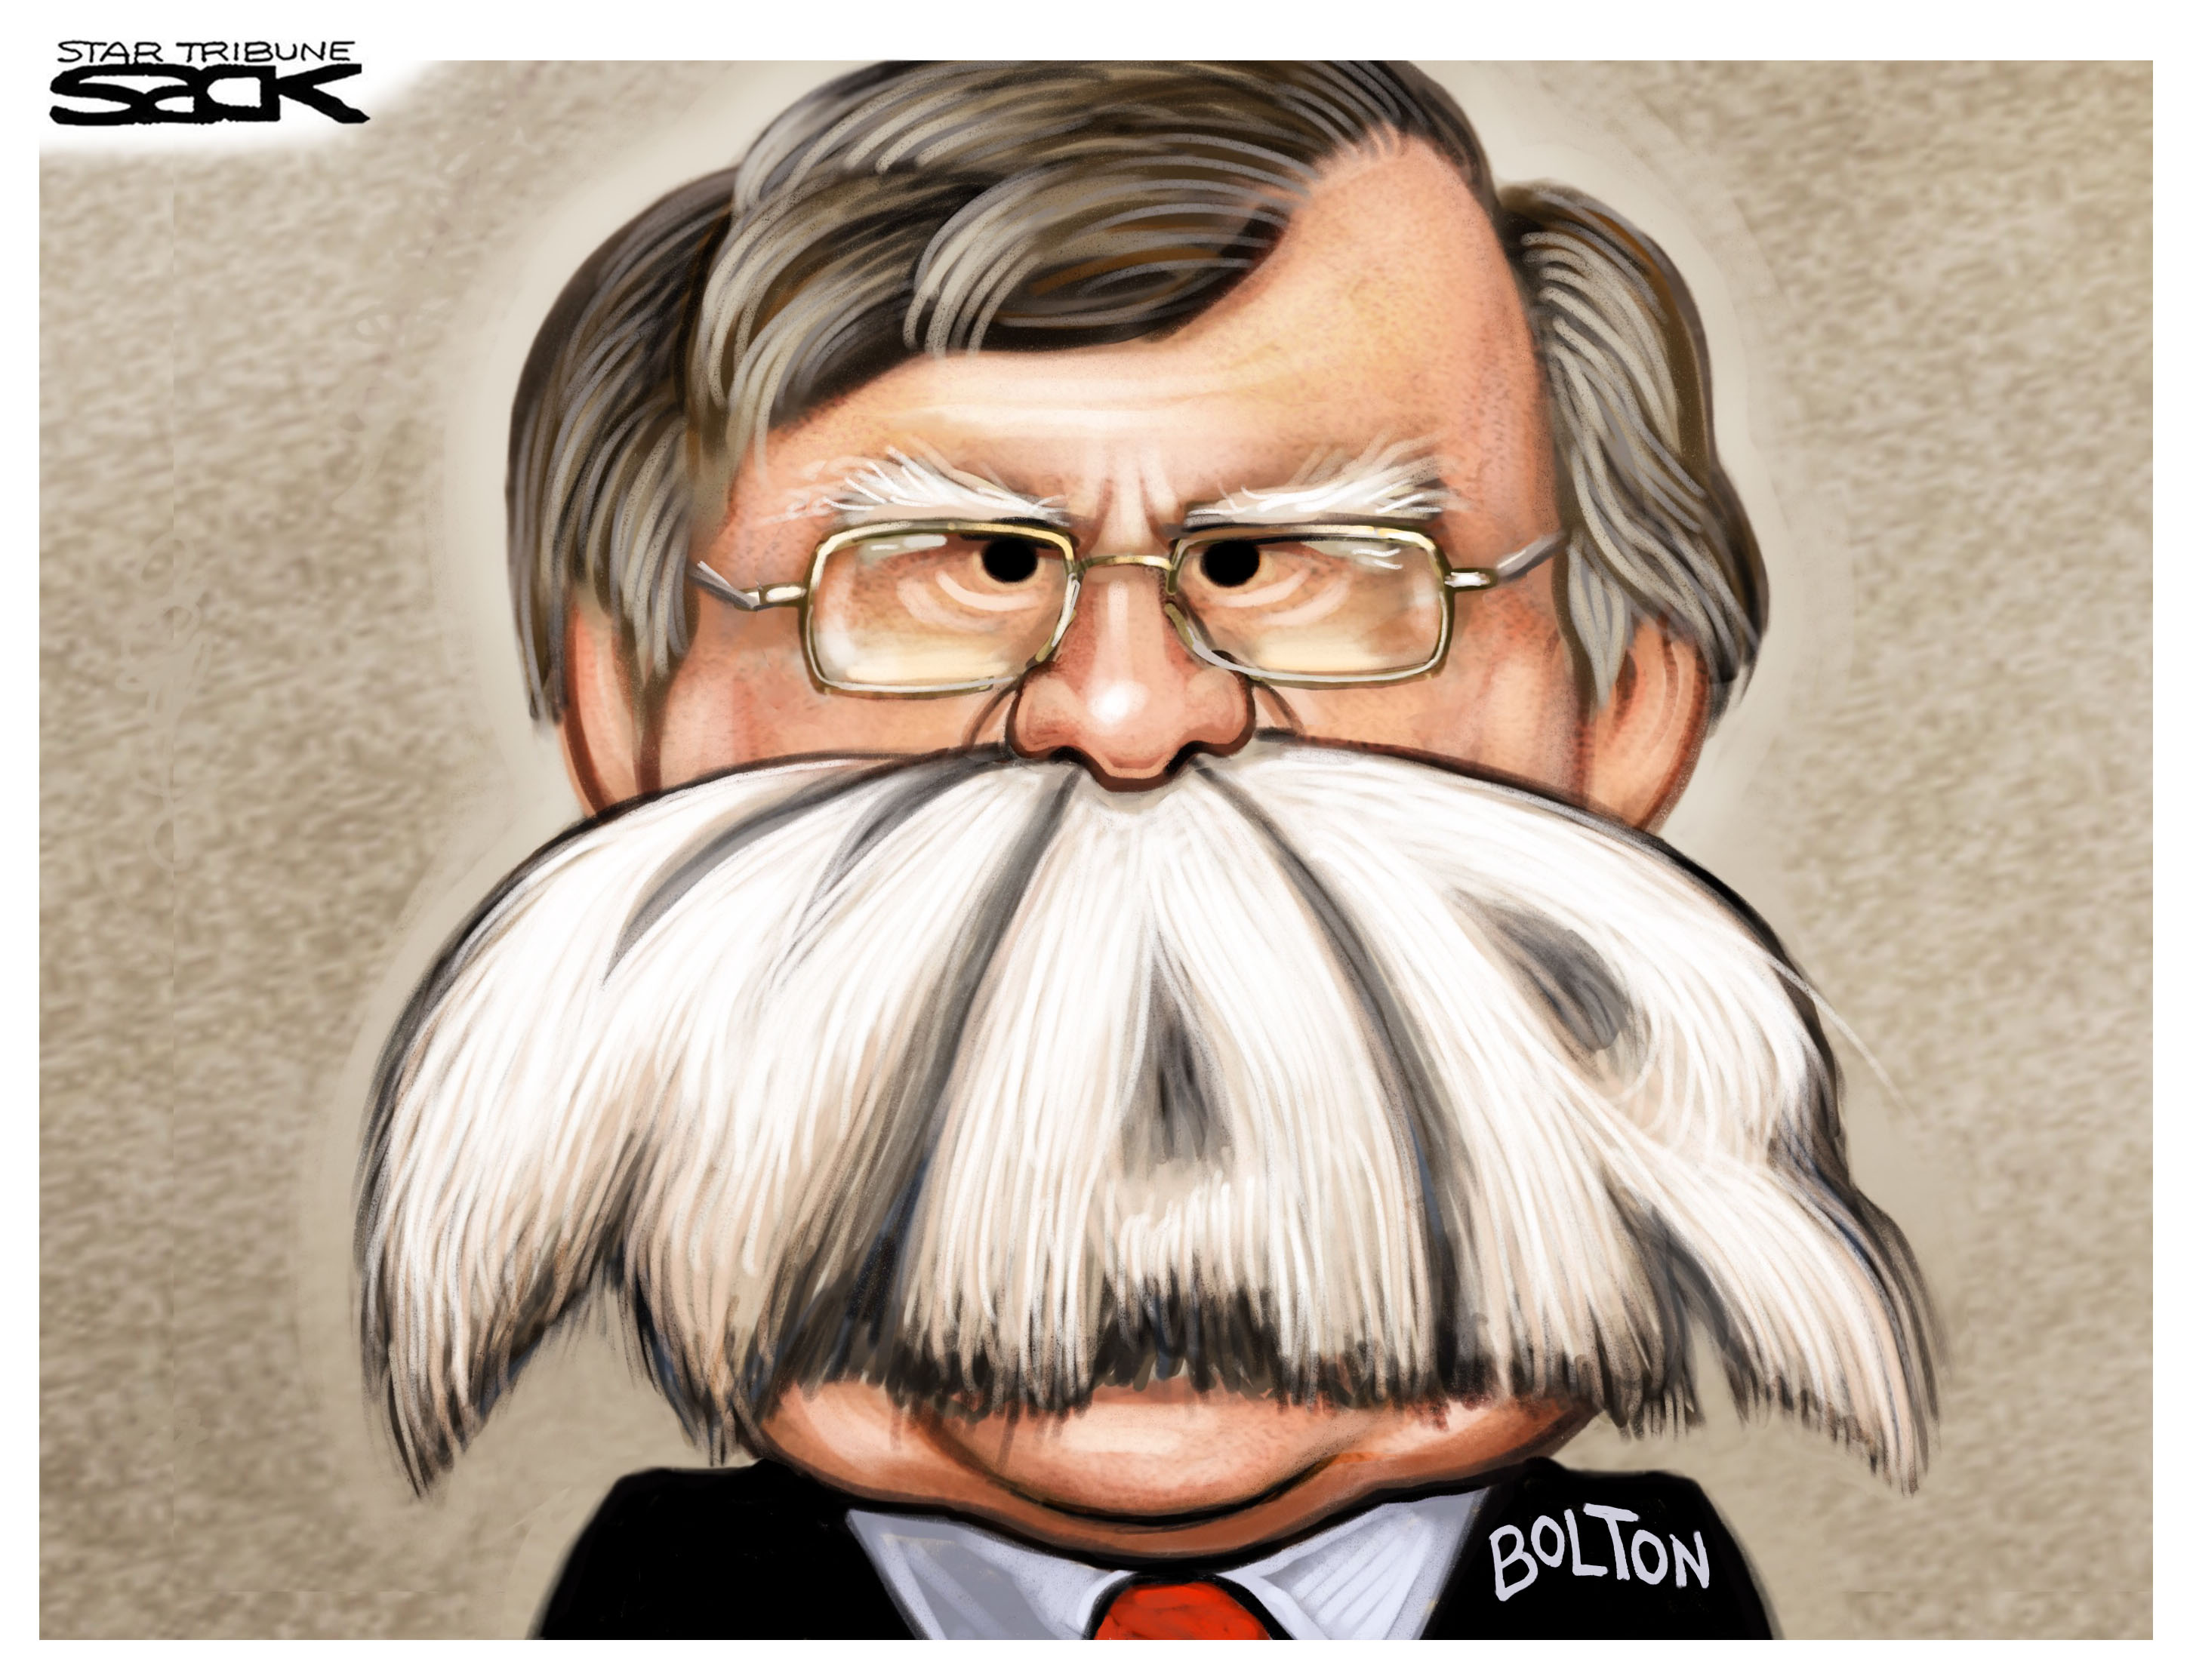 Jjohn Bolton War Mustache by Steve Sack, Cagle Cartoons and Star Tribune, 2018.